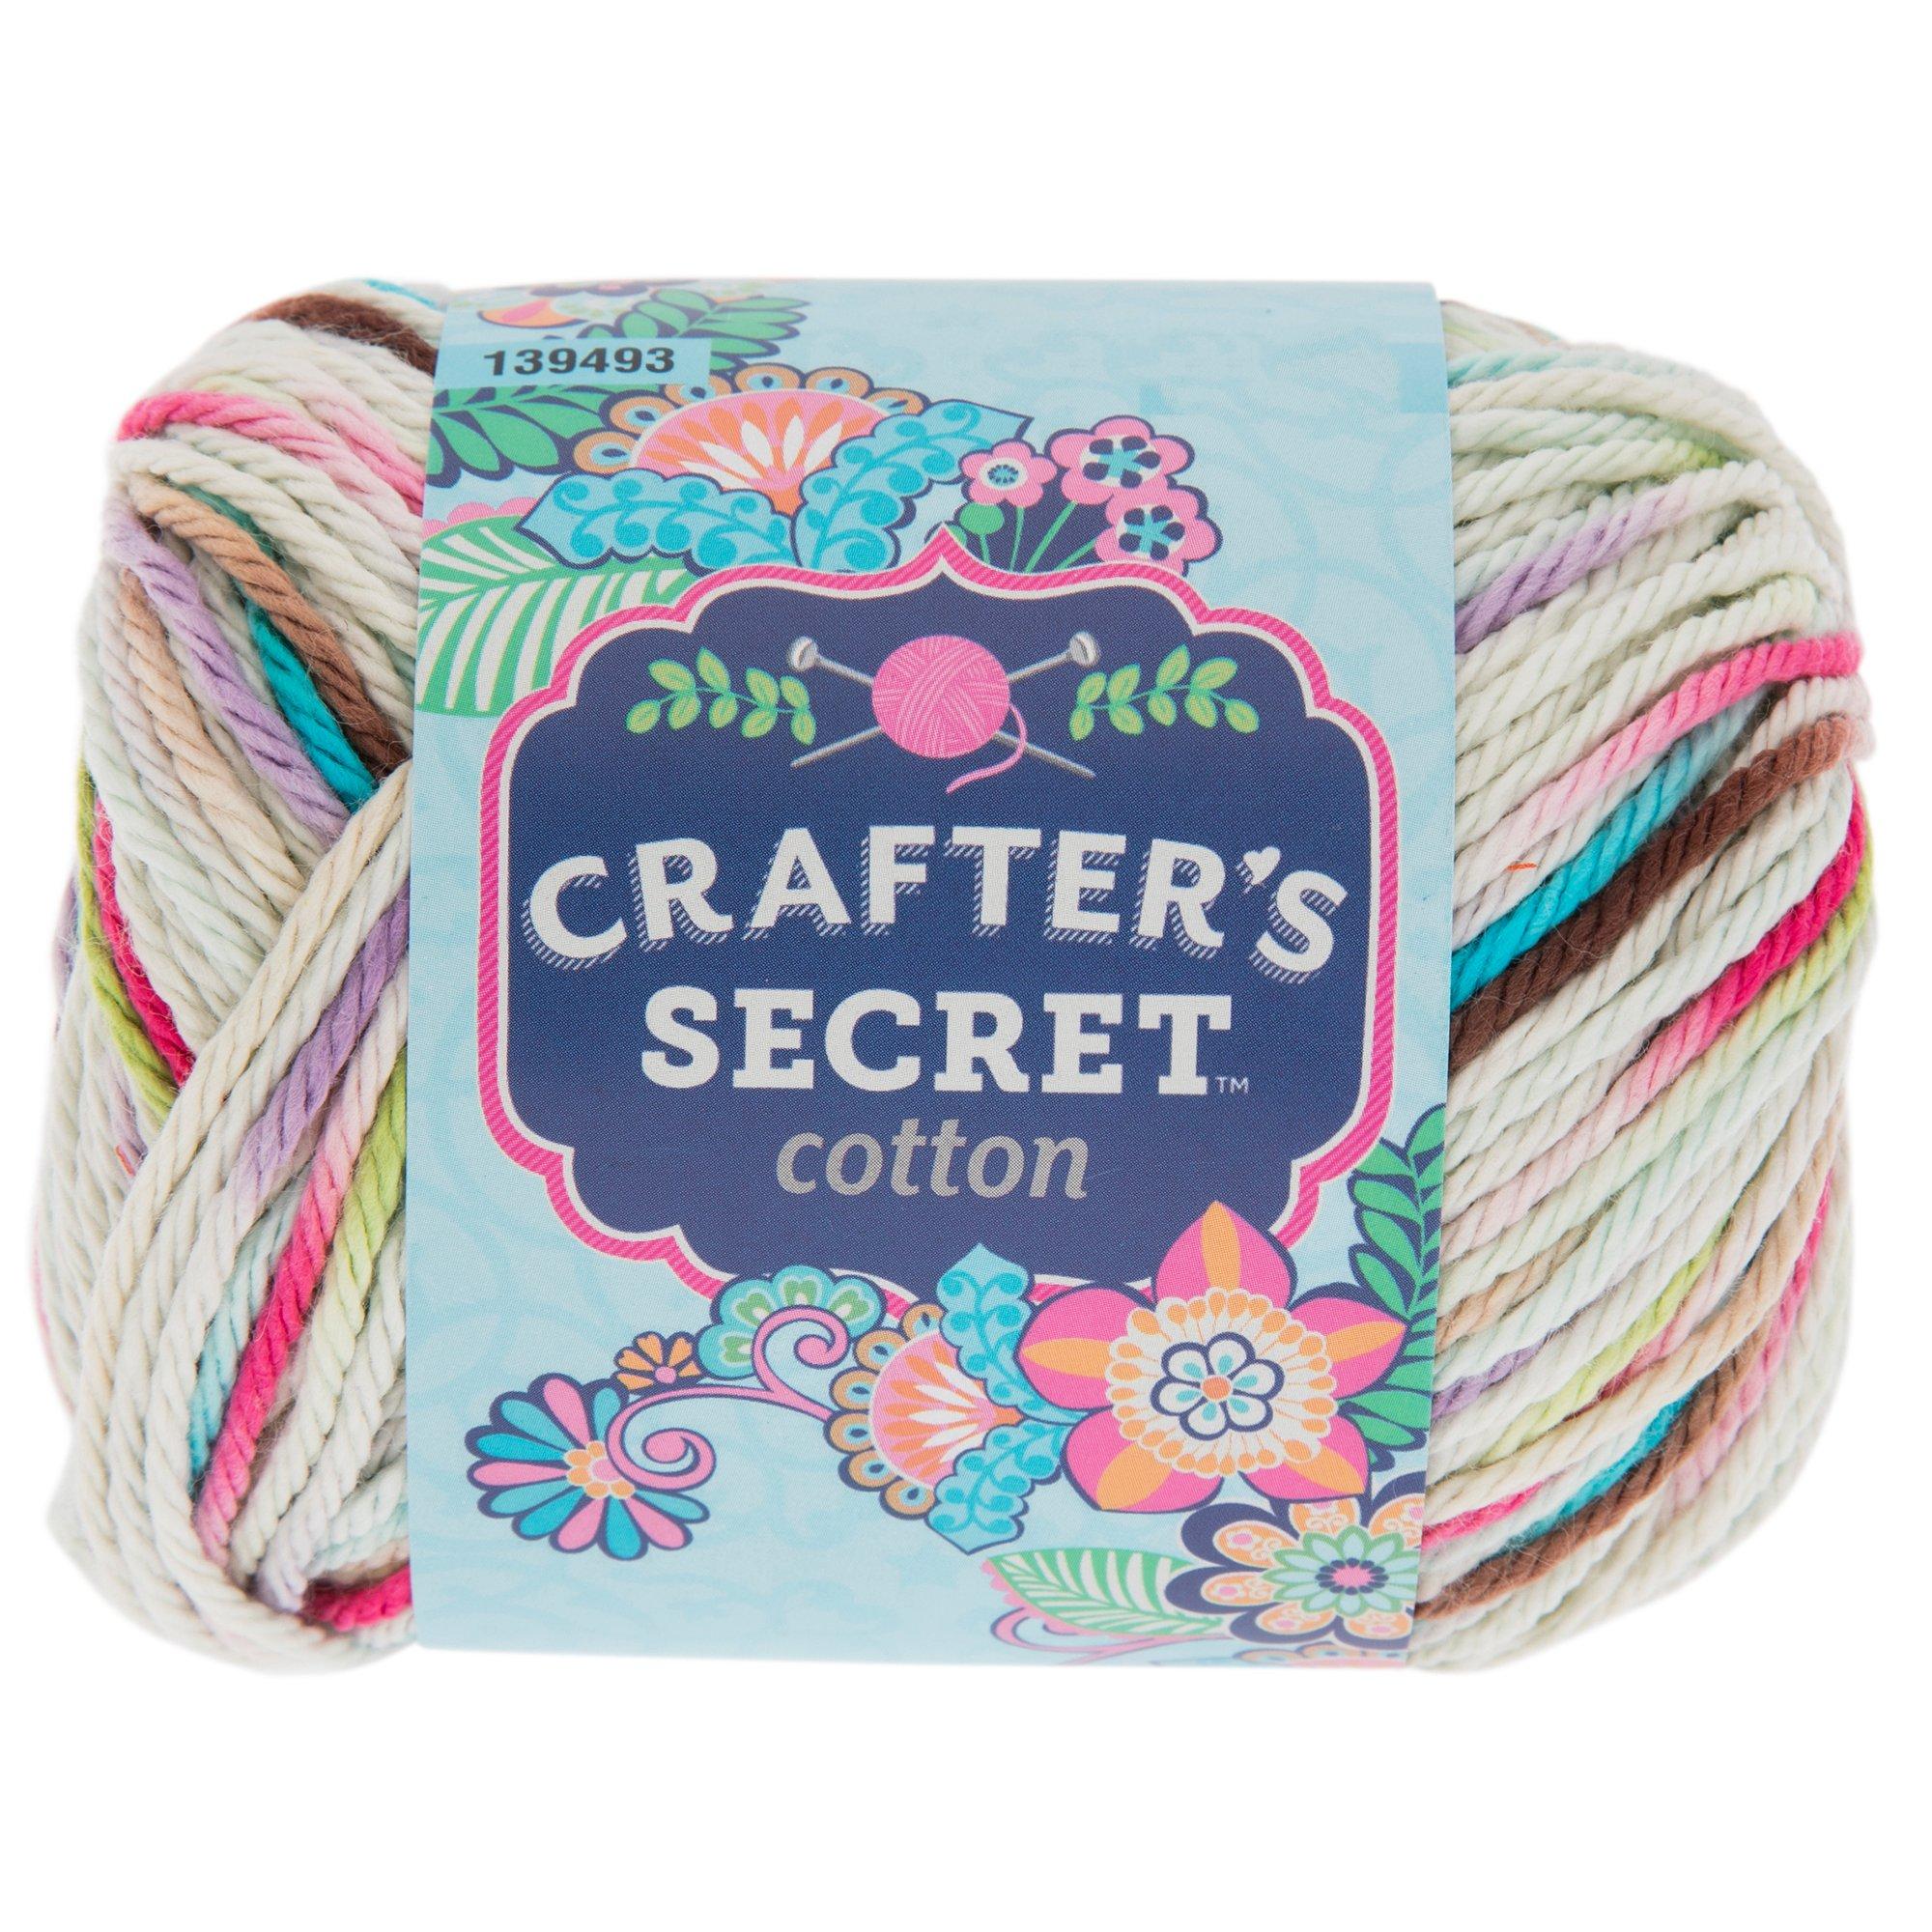 I Love This Cotton Yarn, Hobby Lobby